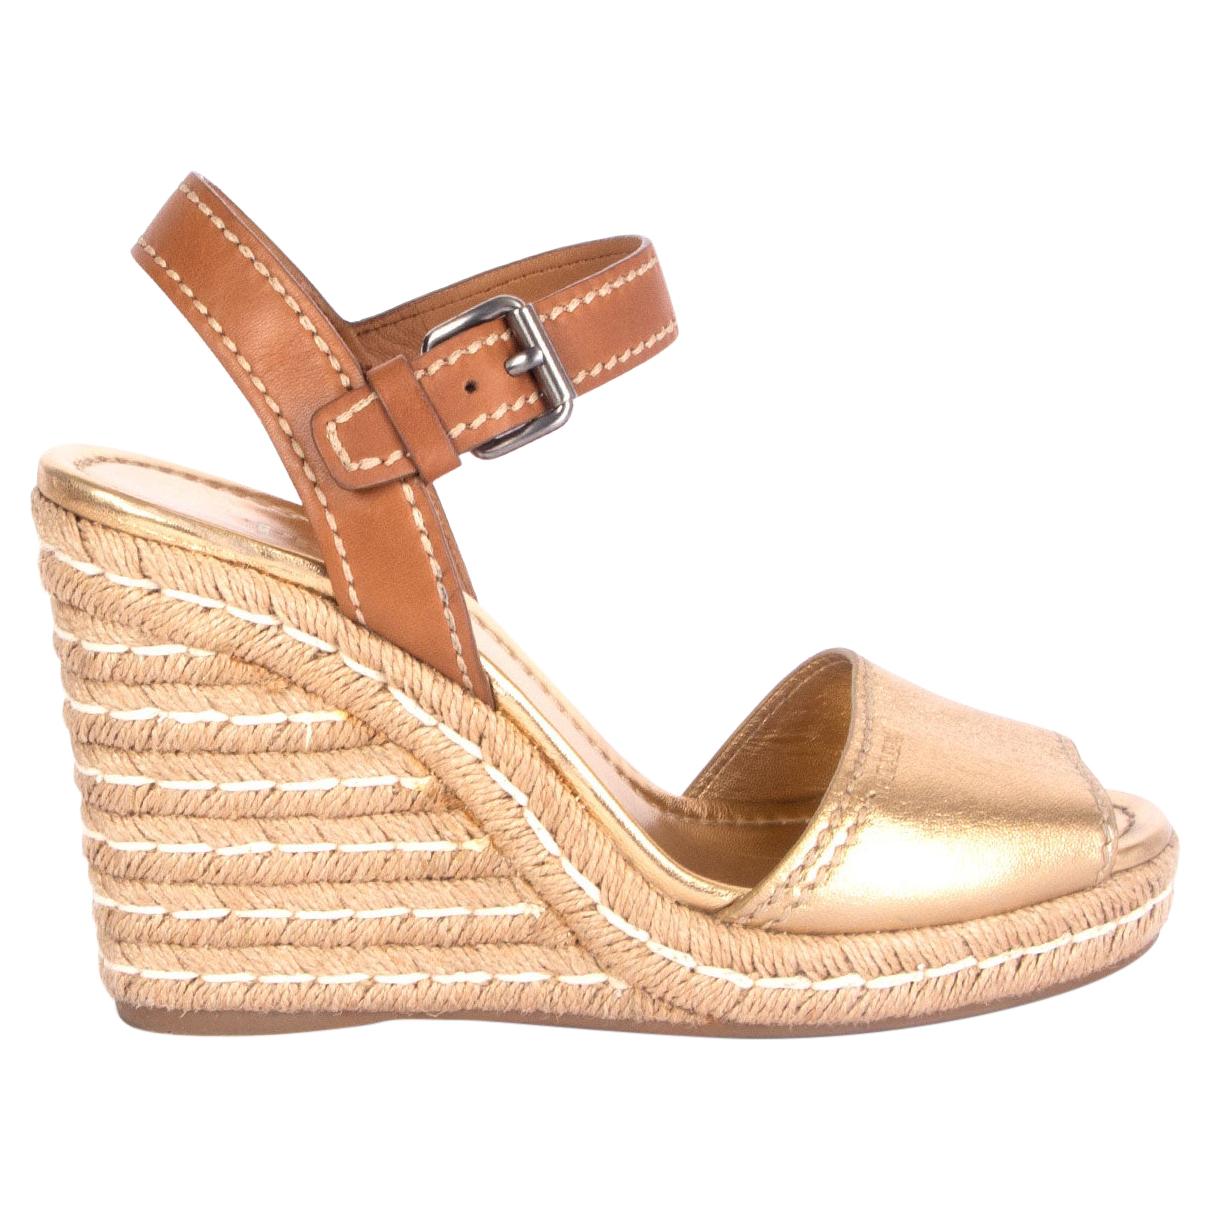 PRADA metallic gold & brown leather Wedge Espadrille Sandals Shoes 40